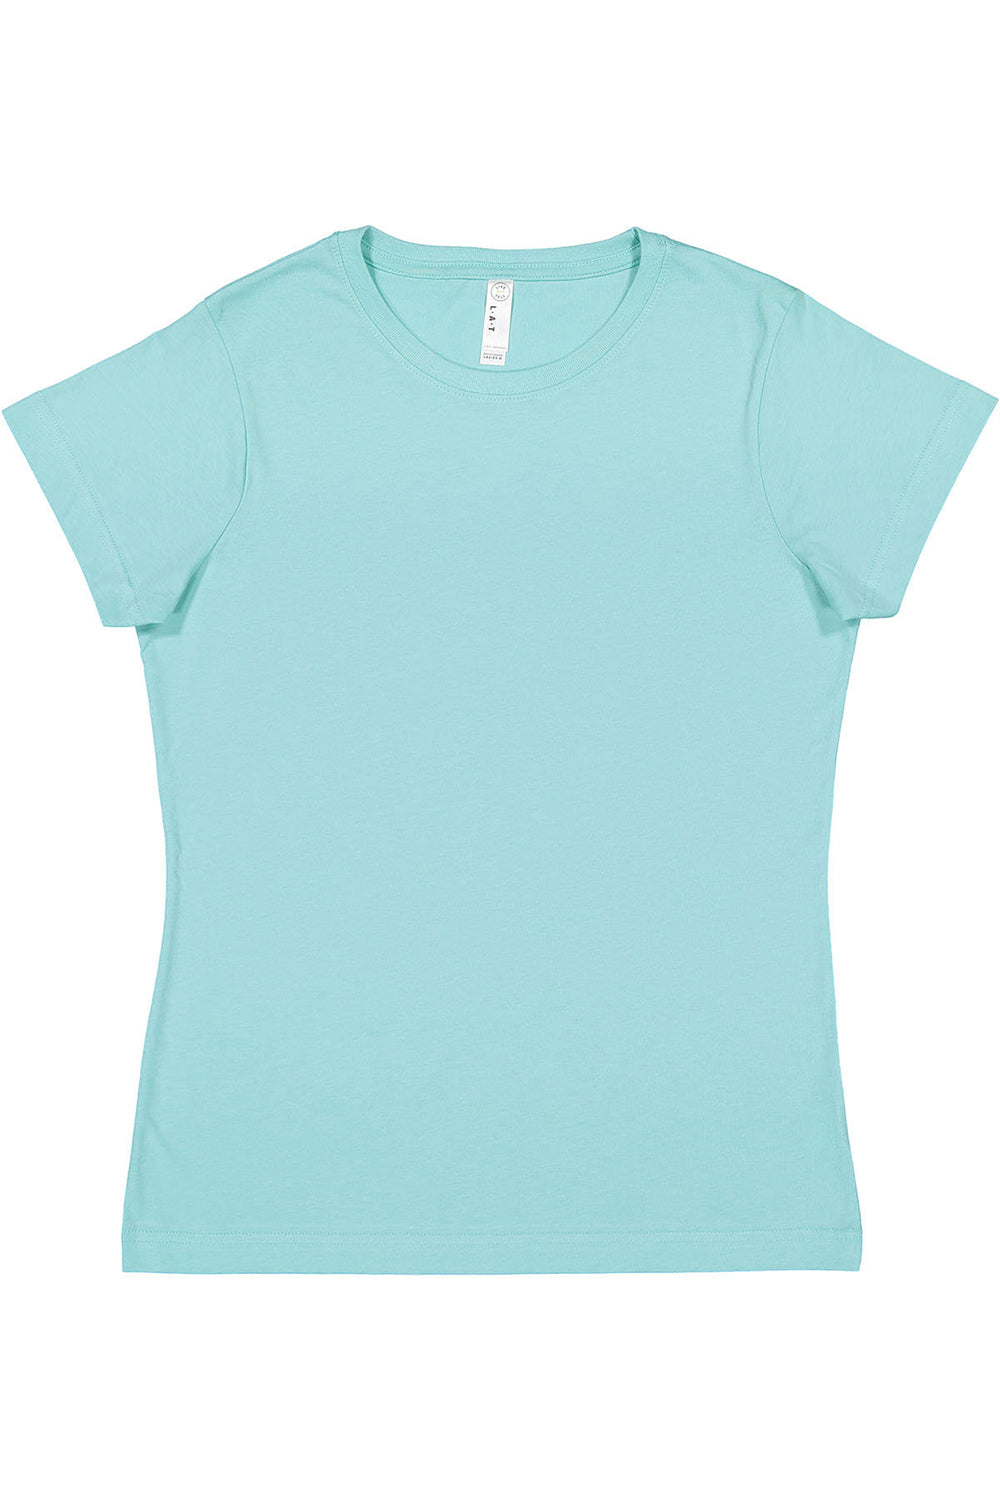 LAT 3516 Womens Fine Jersey Short Sleeve Crewneck T-Shirt Chill Blue Flat Front